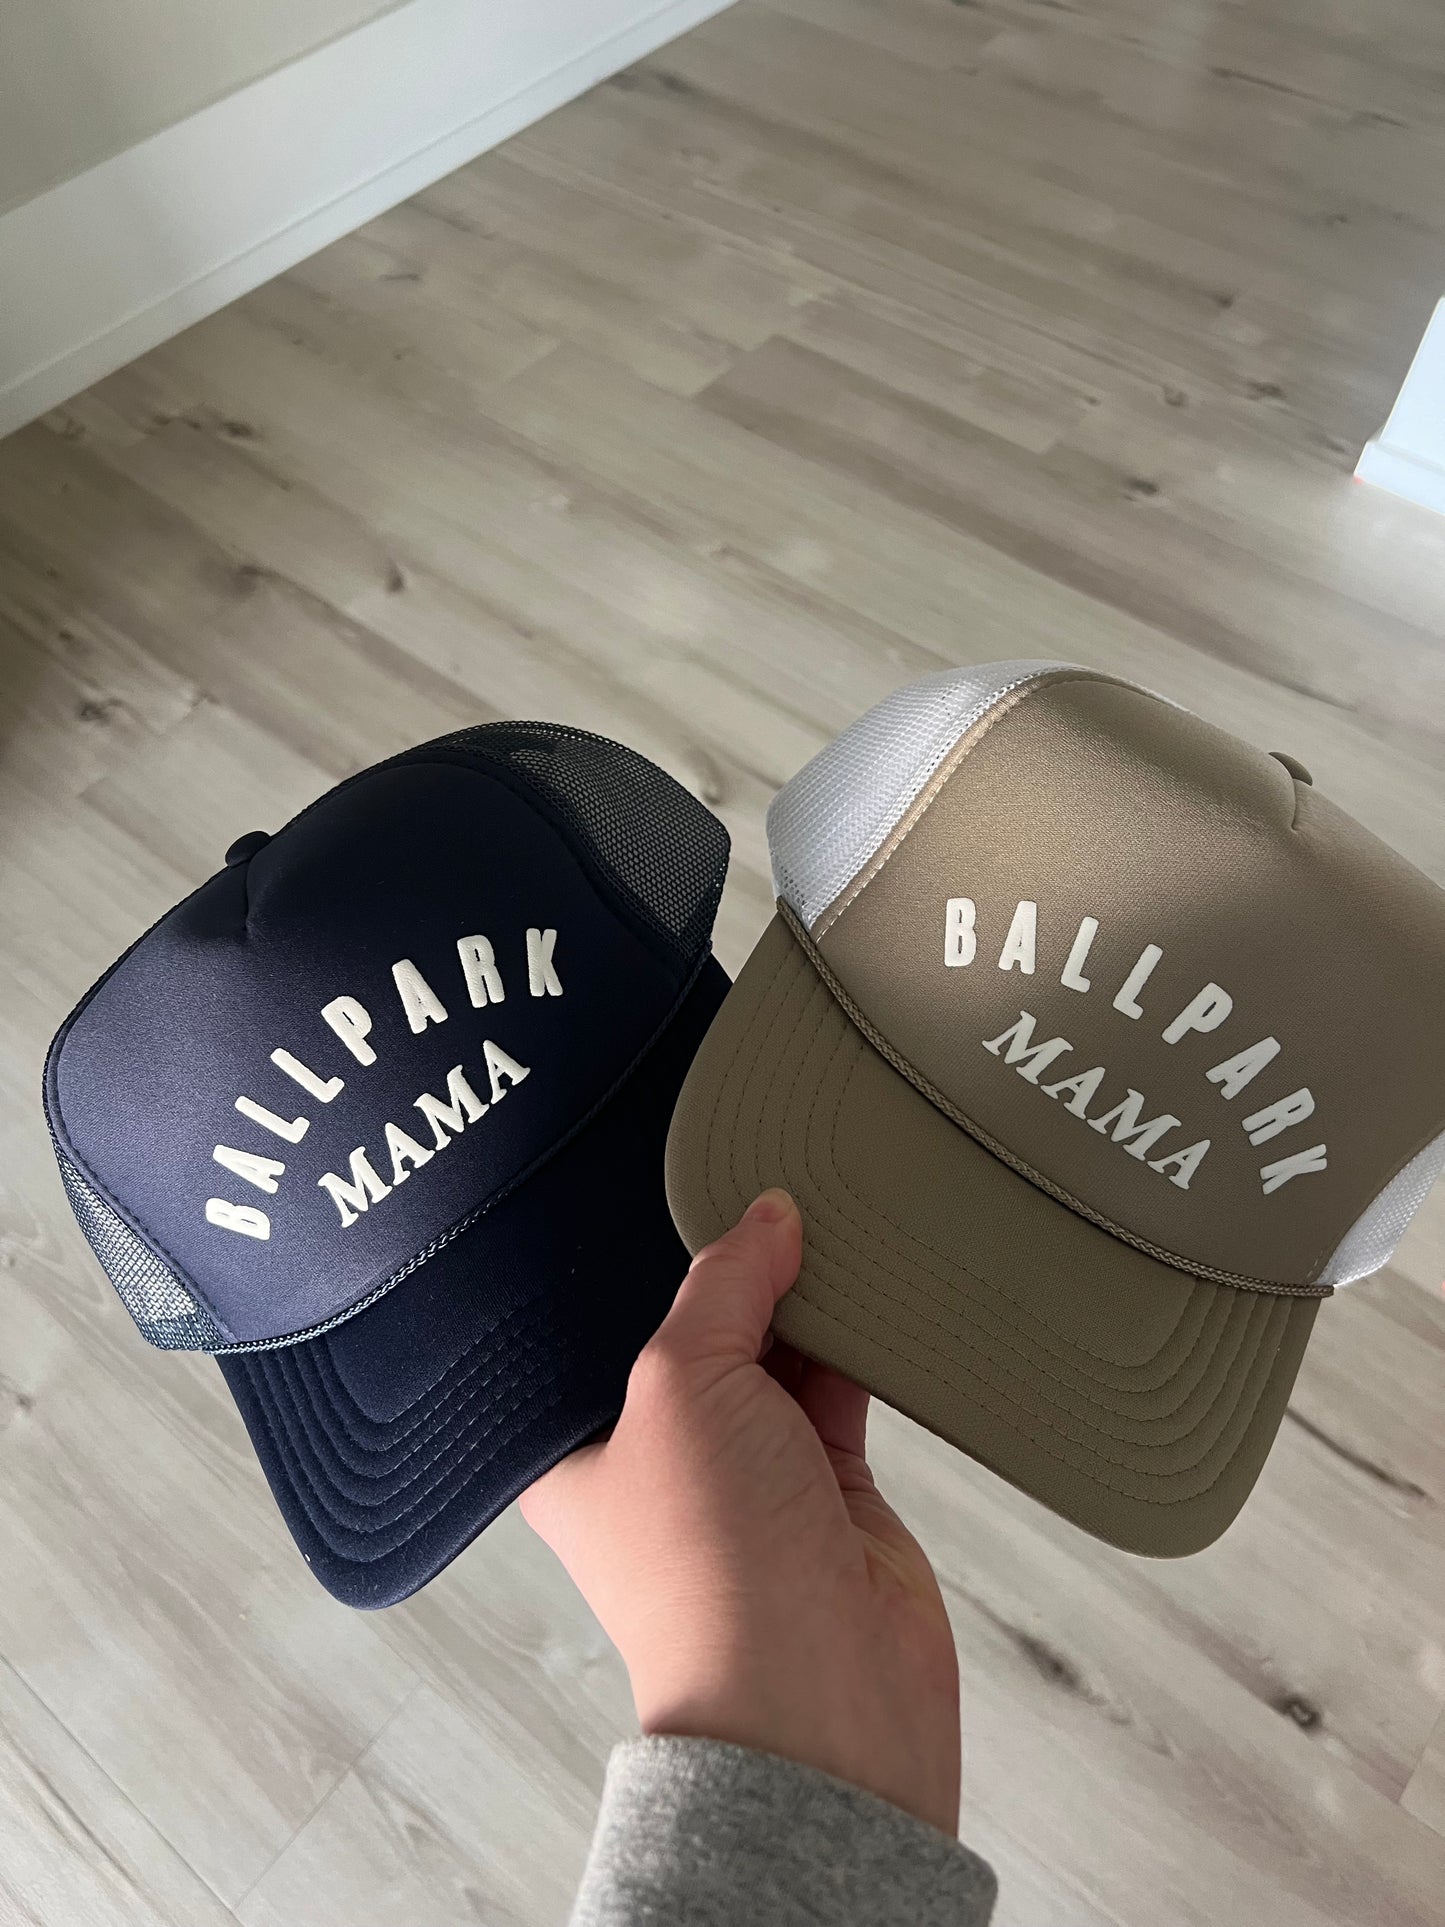 Ballpark Mama Trucker Hat